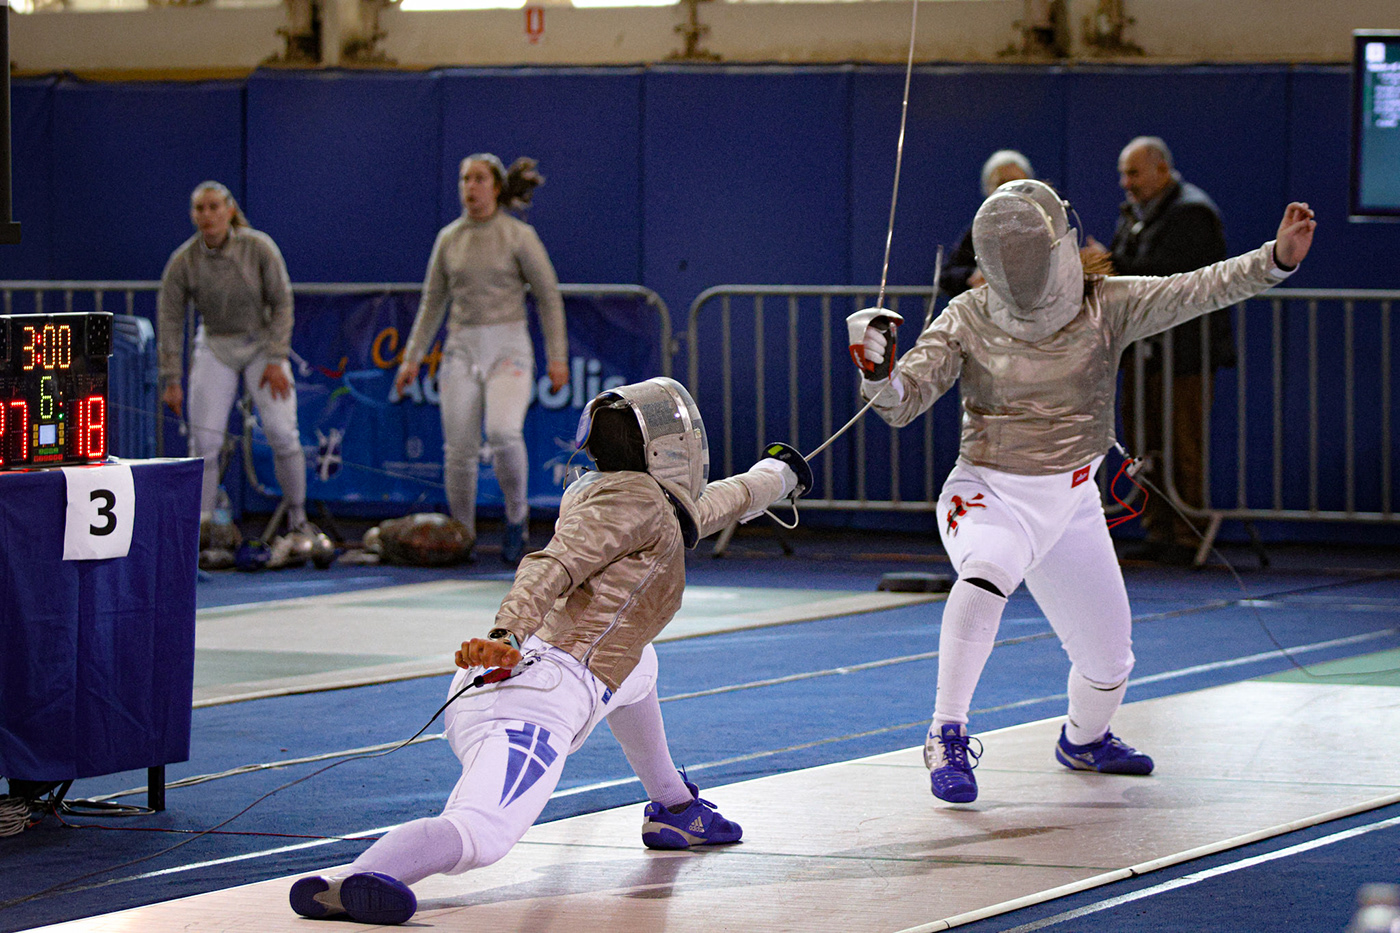 fencing saber coupe Competition world cup sports escrime esgrima